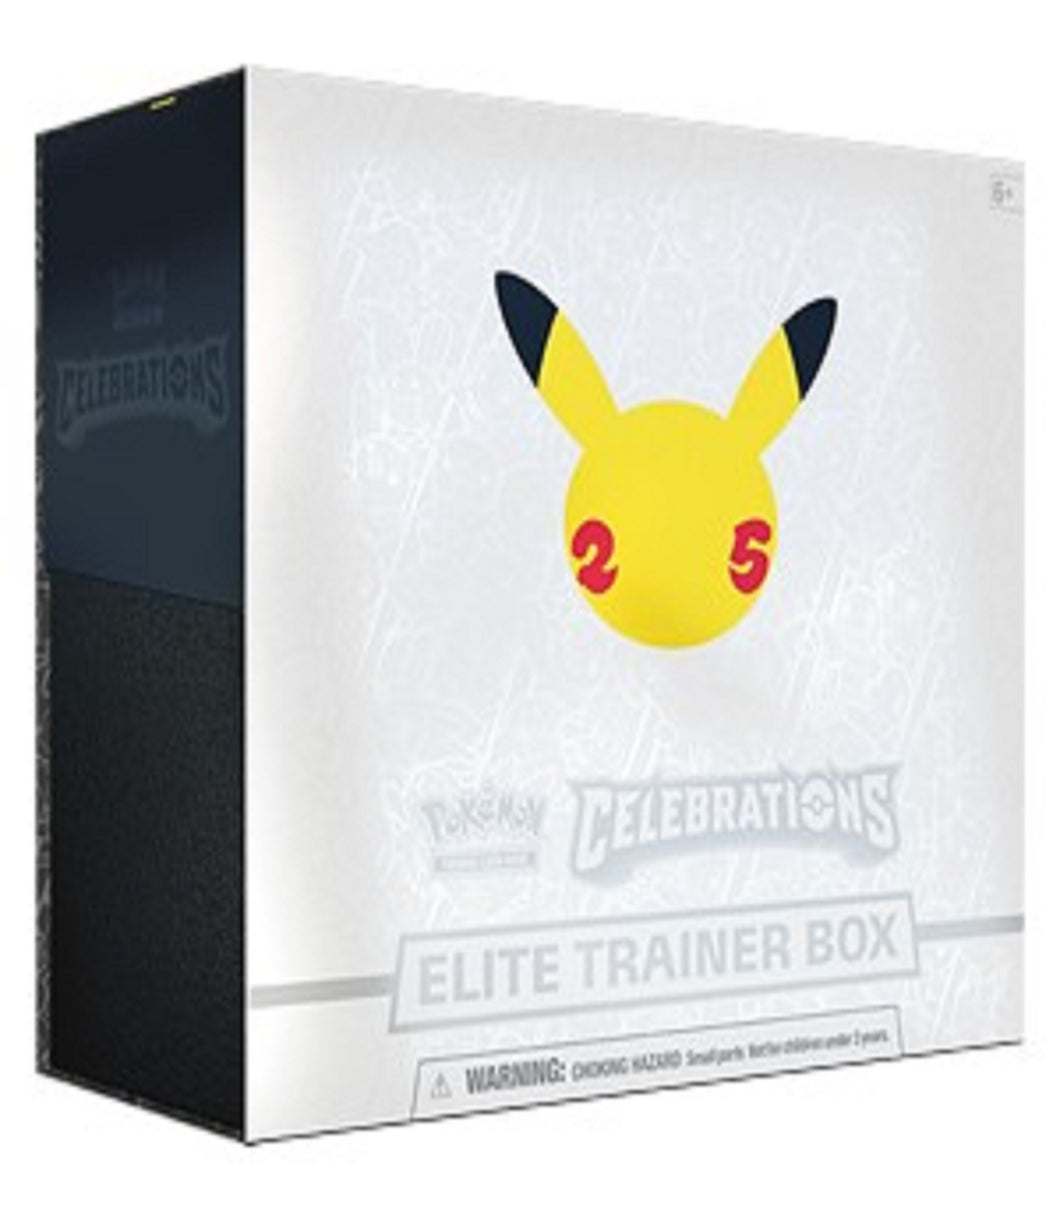 Celebrations Elite Trainer Box Break